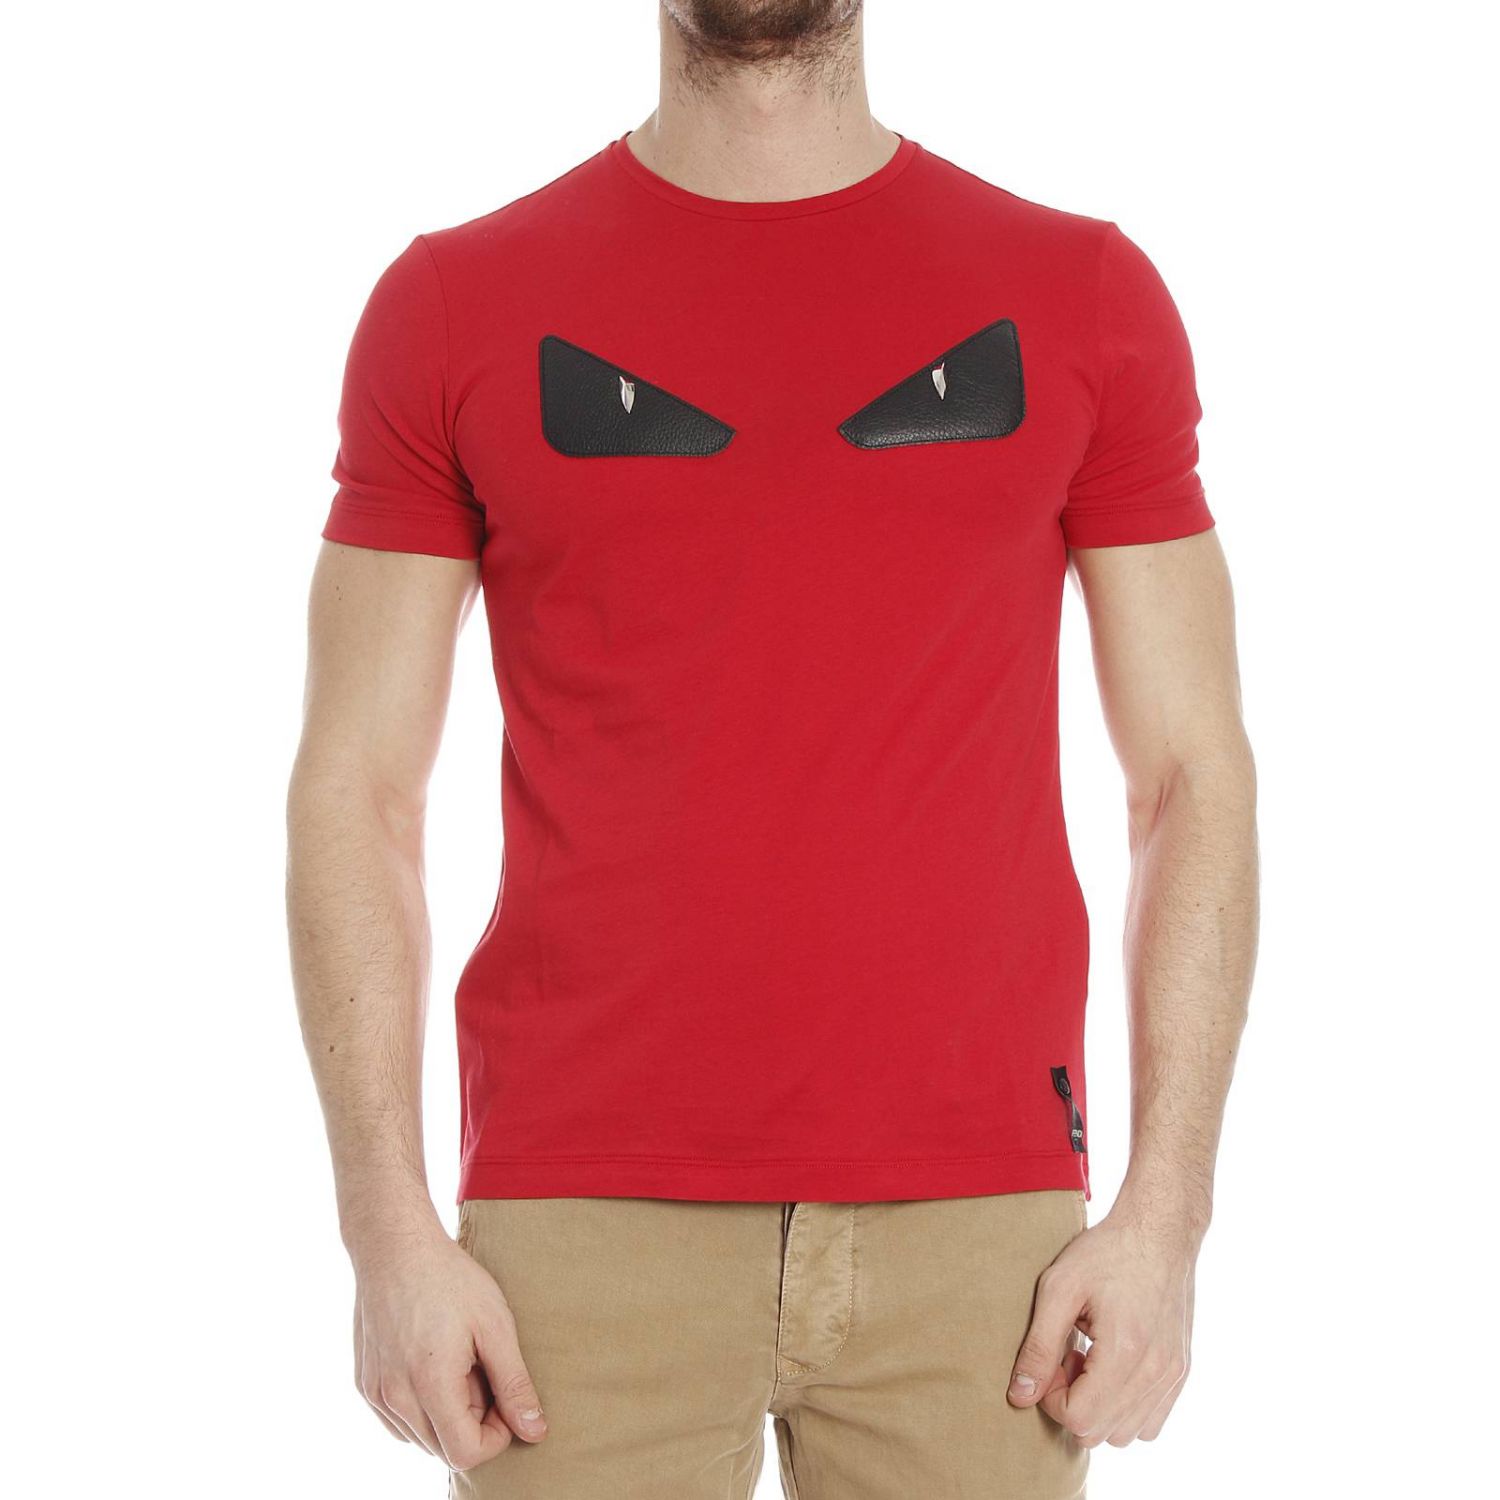 FENDI: | T-Shirt Fendi Men Red | T-Shirt Fendi fy0722 1jf Giglio EN